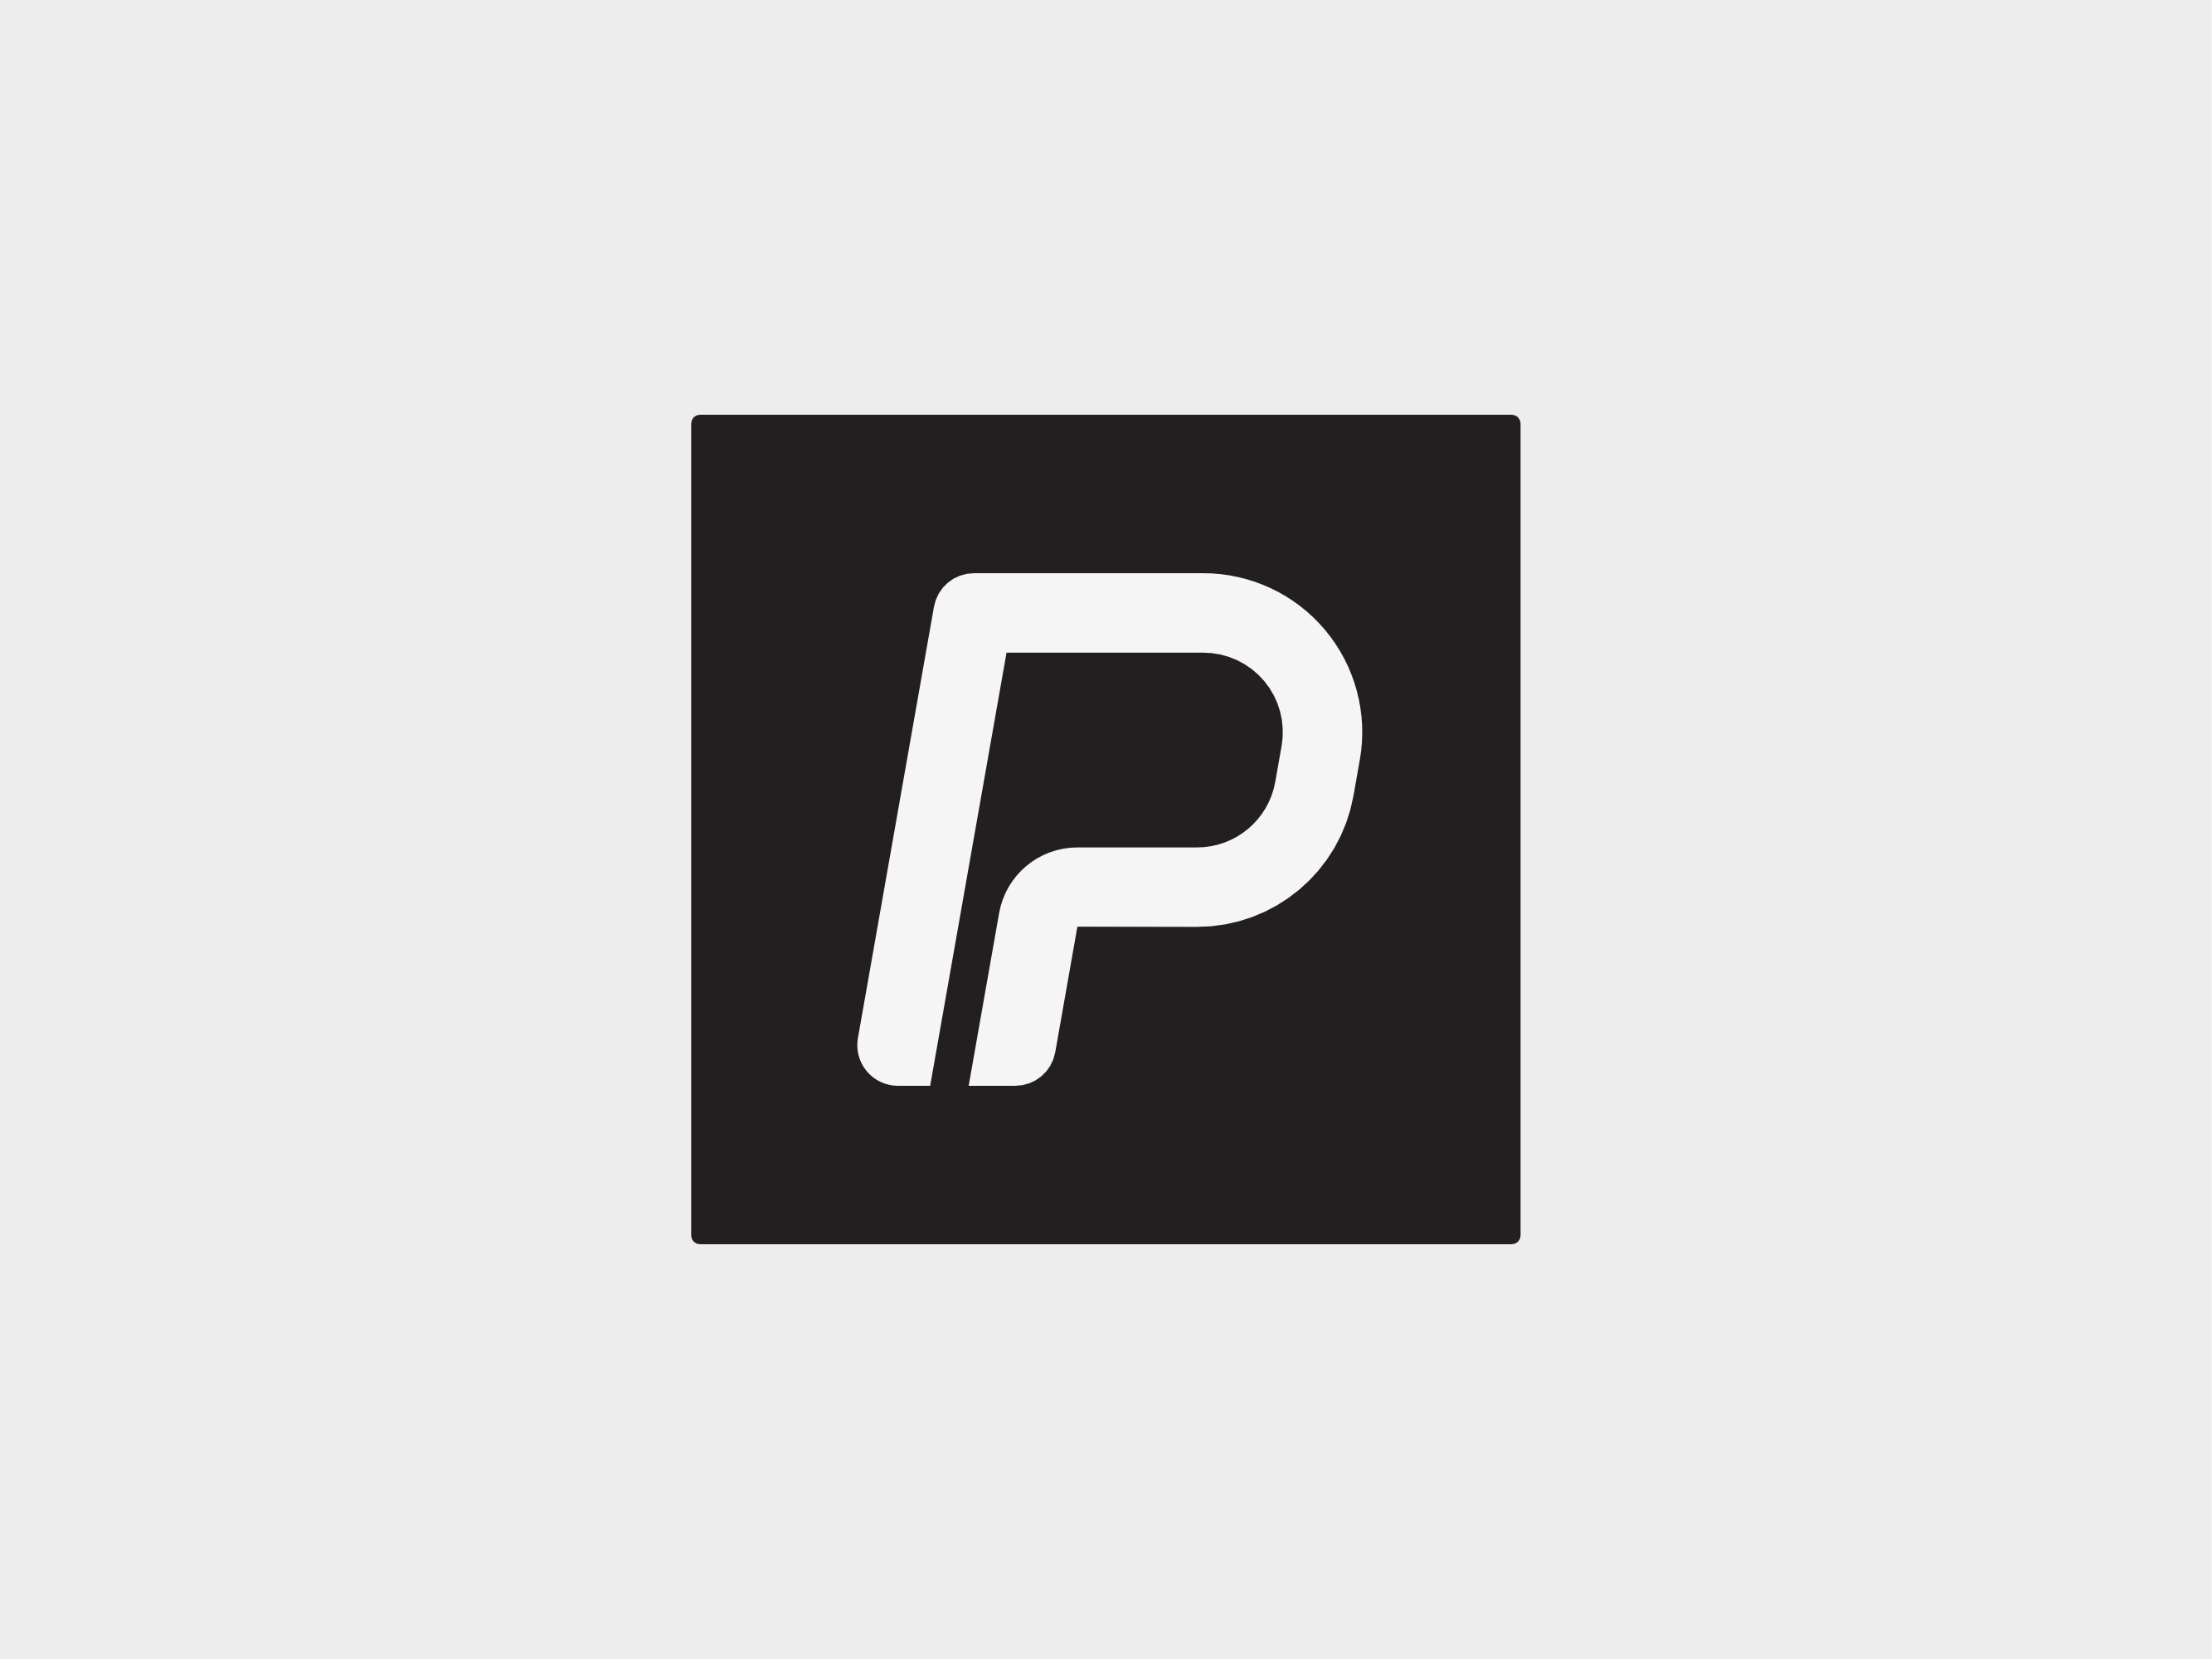 P - Logo by Daniel Rotter on Dribbble